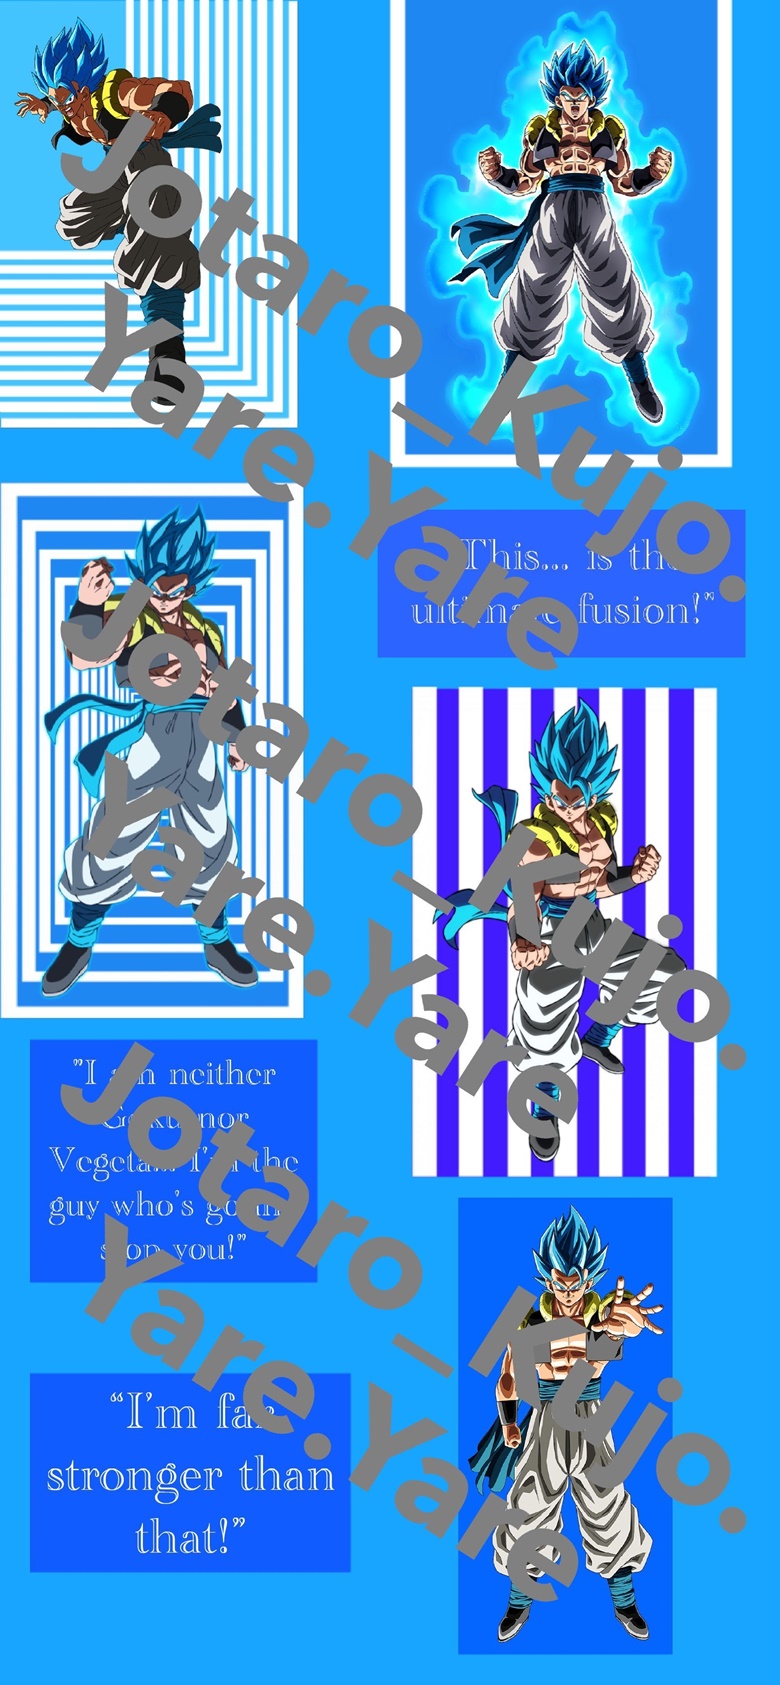 Dragon Ball: Super Super Saiyan God Blue Gogeta digital wallpaper -  Jotaro_Kujo.Yare.Yare's Ko-fi Shop - Ko-fi ❤️ Where creators get support  from fans through donations, memberships, shop sales and more! The original  